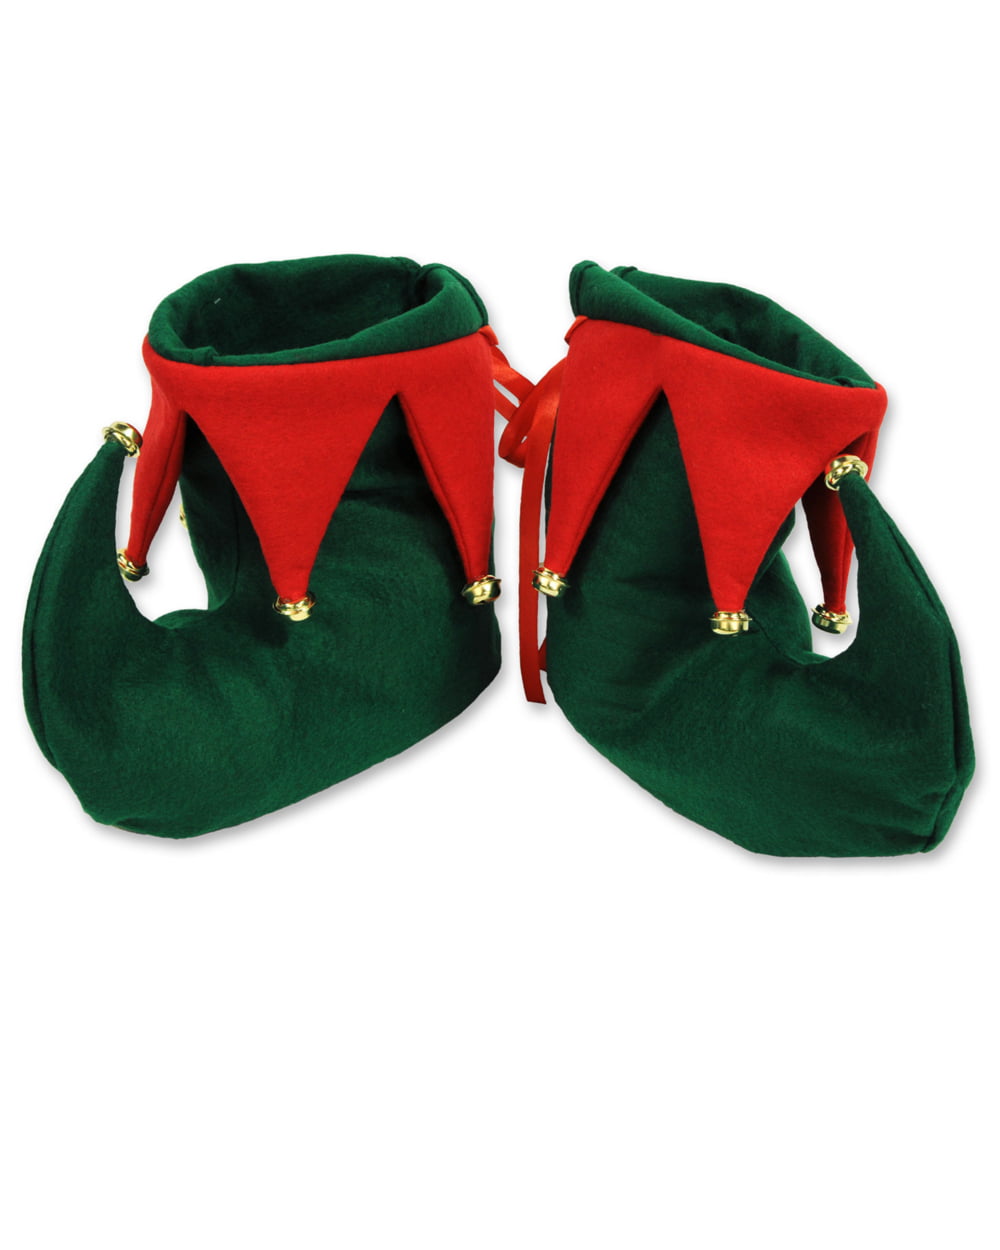 Fun Green Elf Shoes Jingle Bells Santas Helper Christmas House Slippers Unisex 